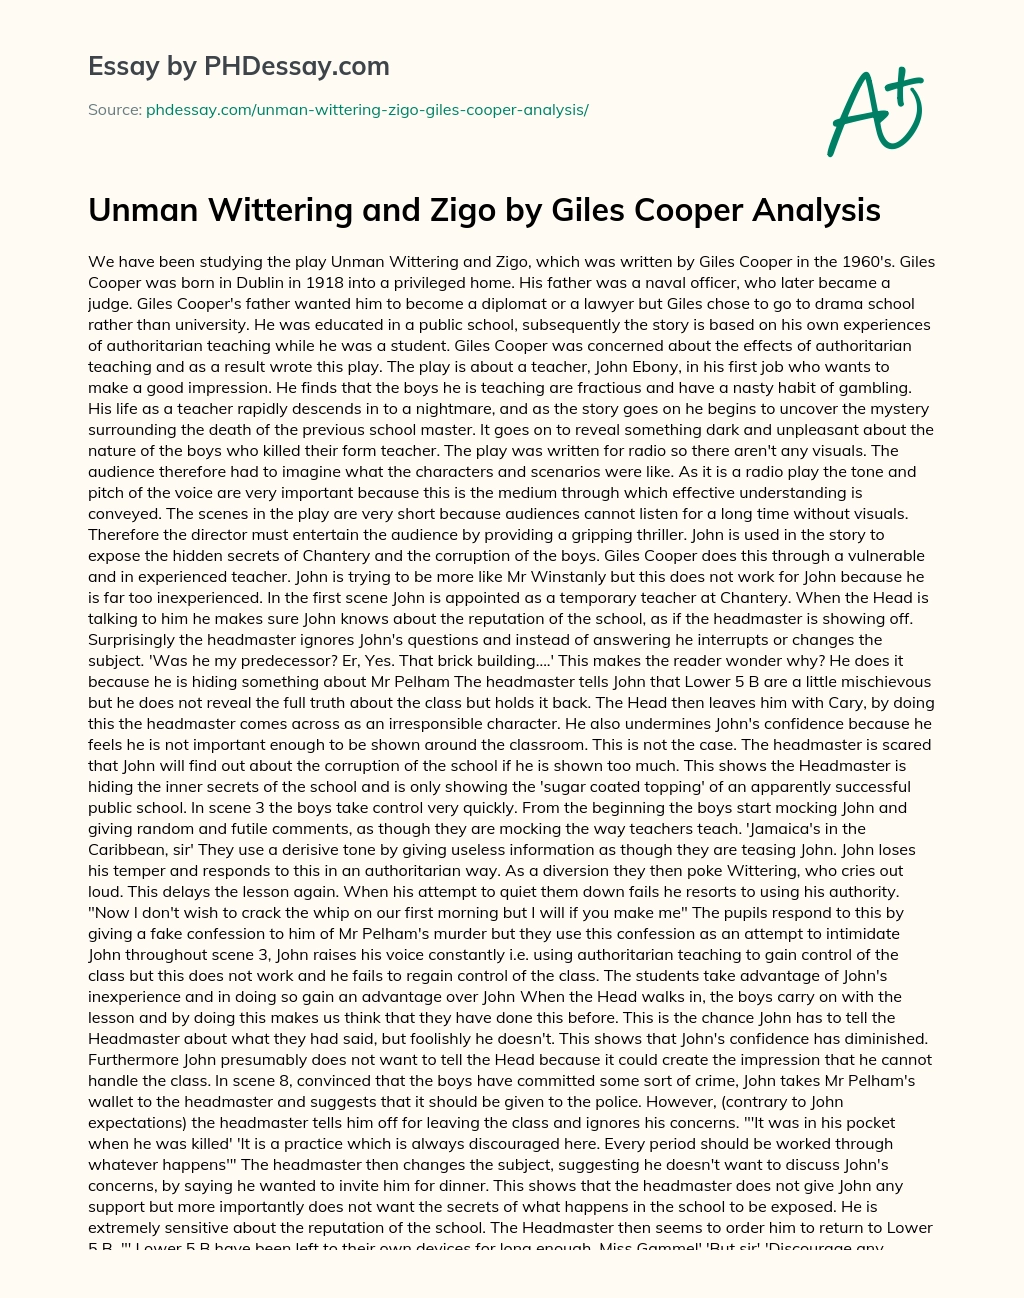 Unman Wittering and Zigo by Giles Cooper Analysis essay